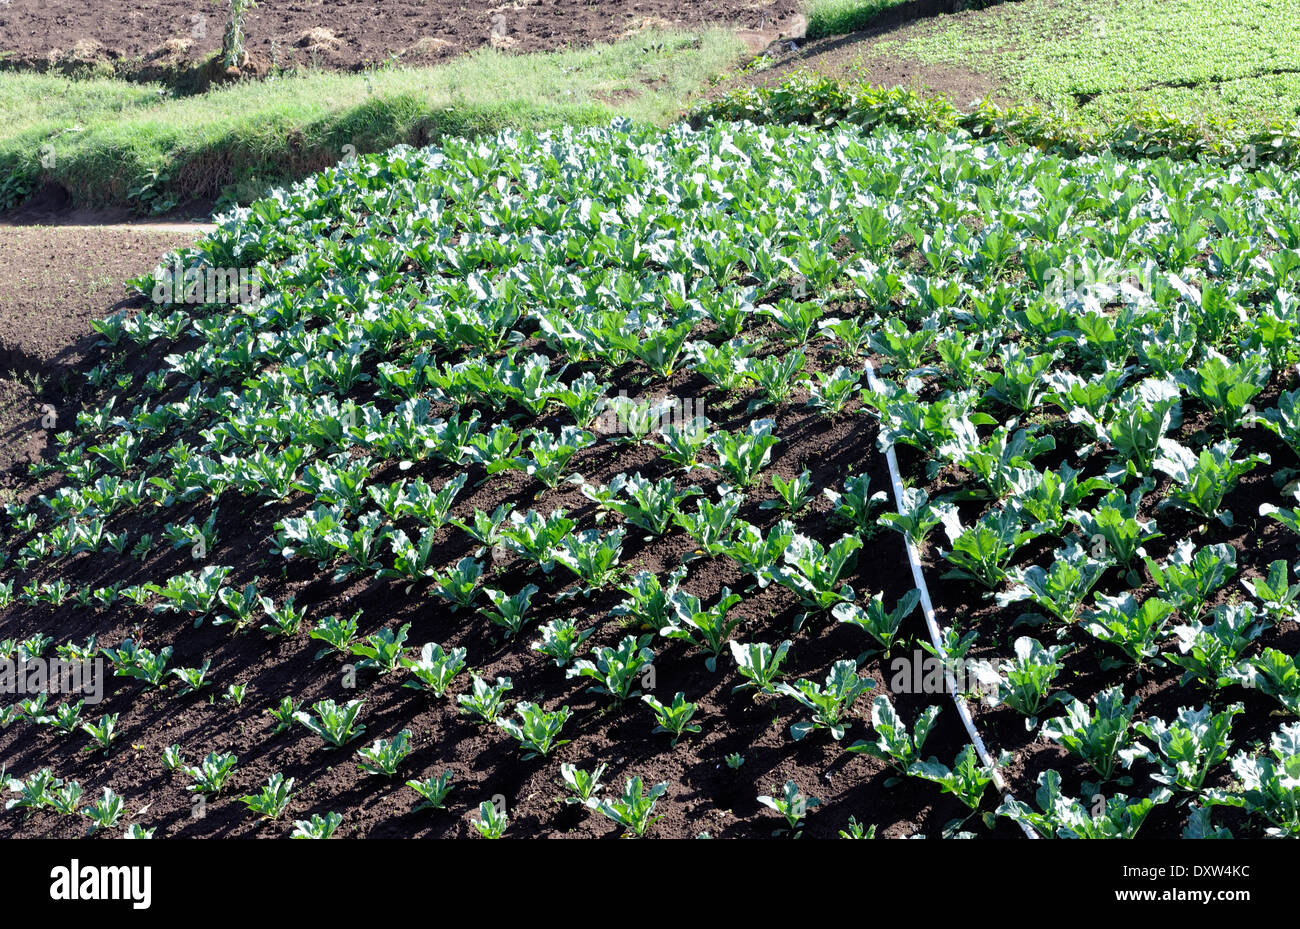 Well watered cabbage plants grow in rich black volcanic soil on a steep hillside above Almolonga. San Pedro de Almolonga, Stock Photo